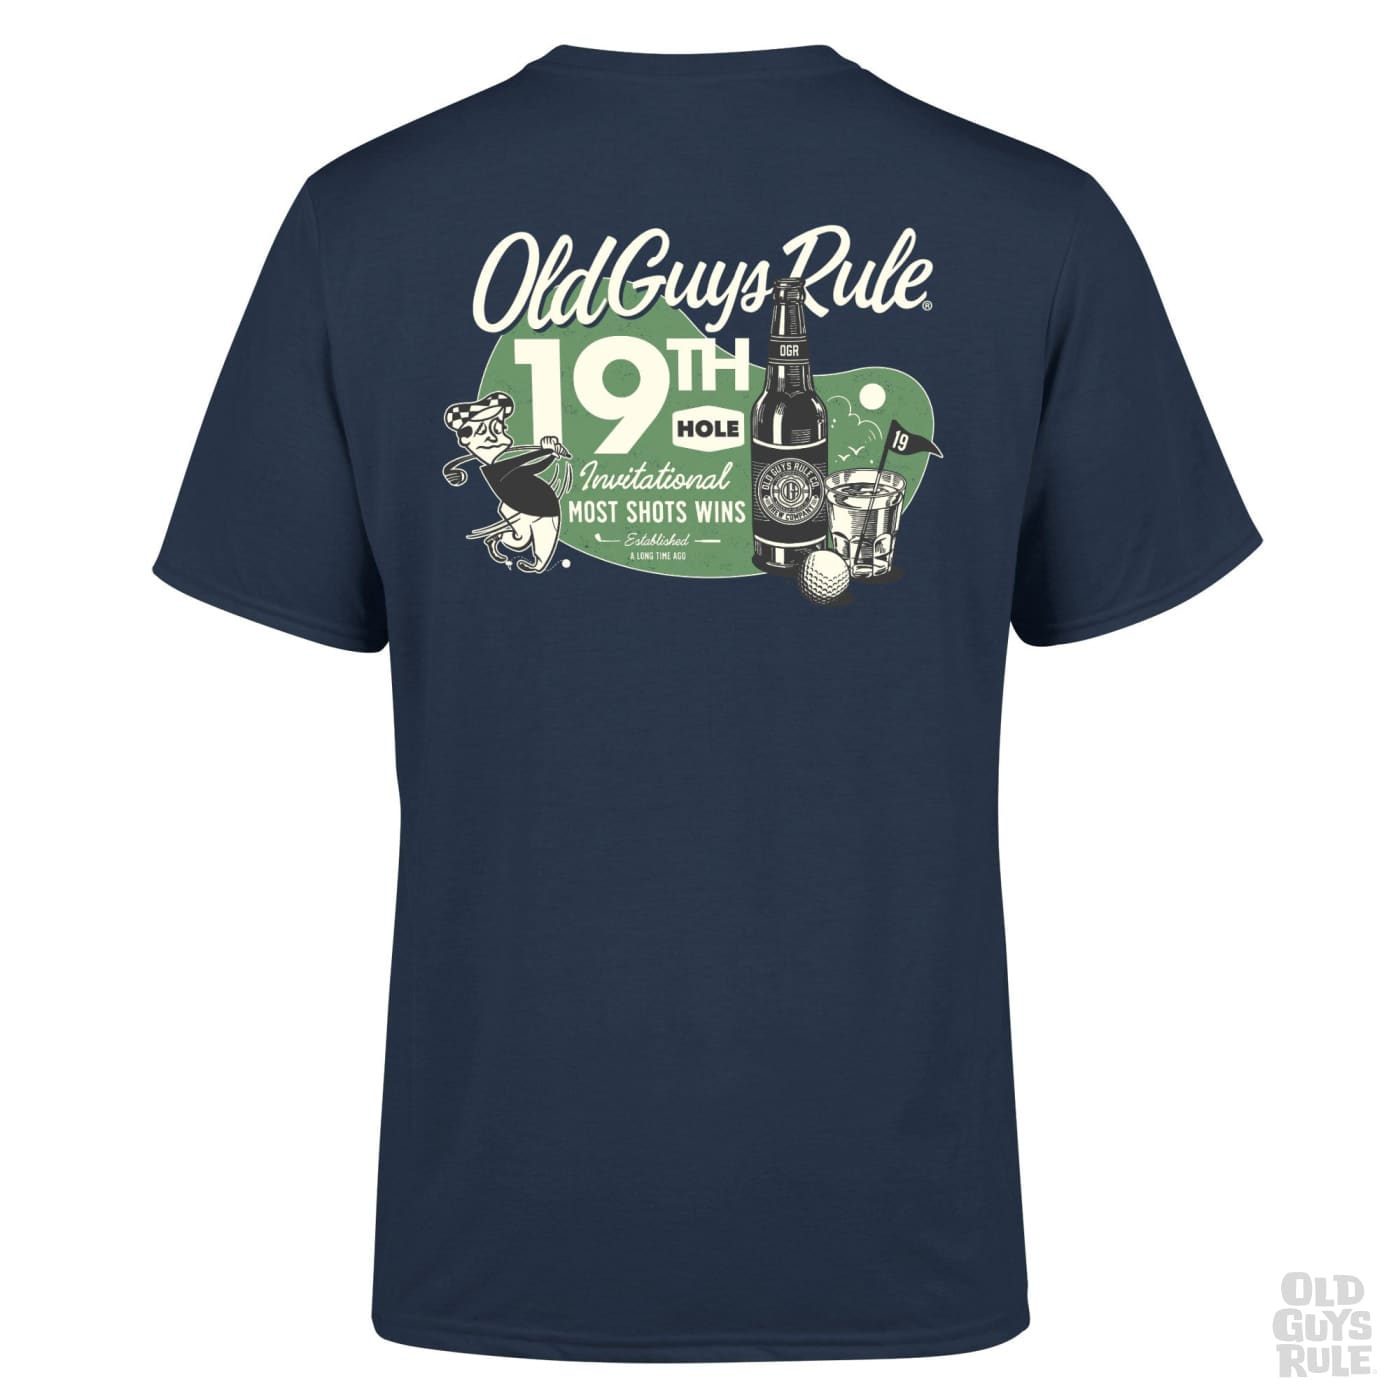 Old Guys Rule 19th Hole Invitational T-Shirt - Blue Dusk